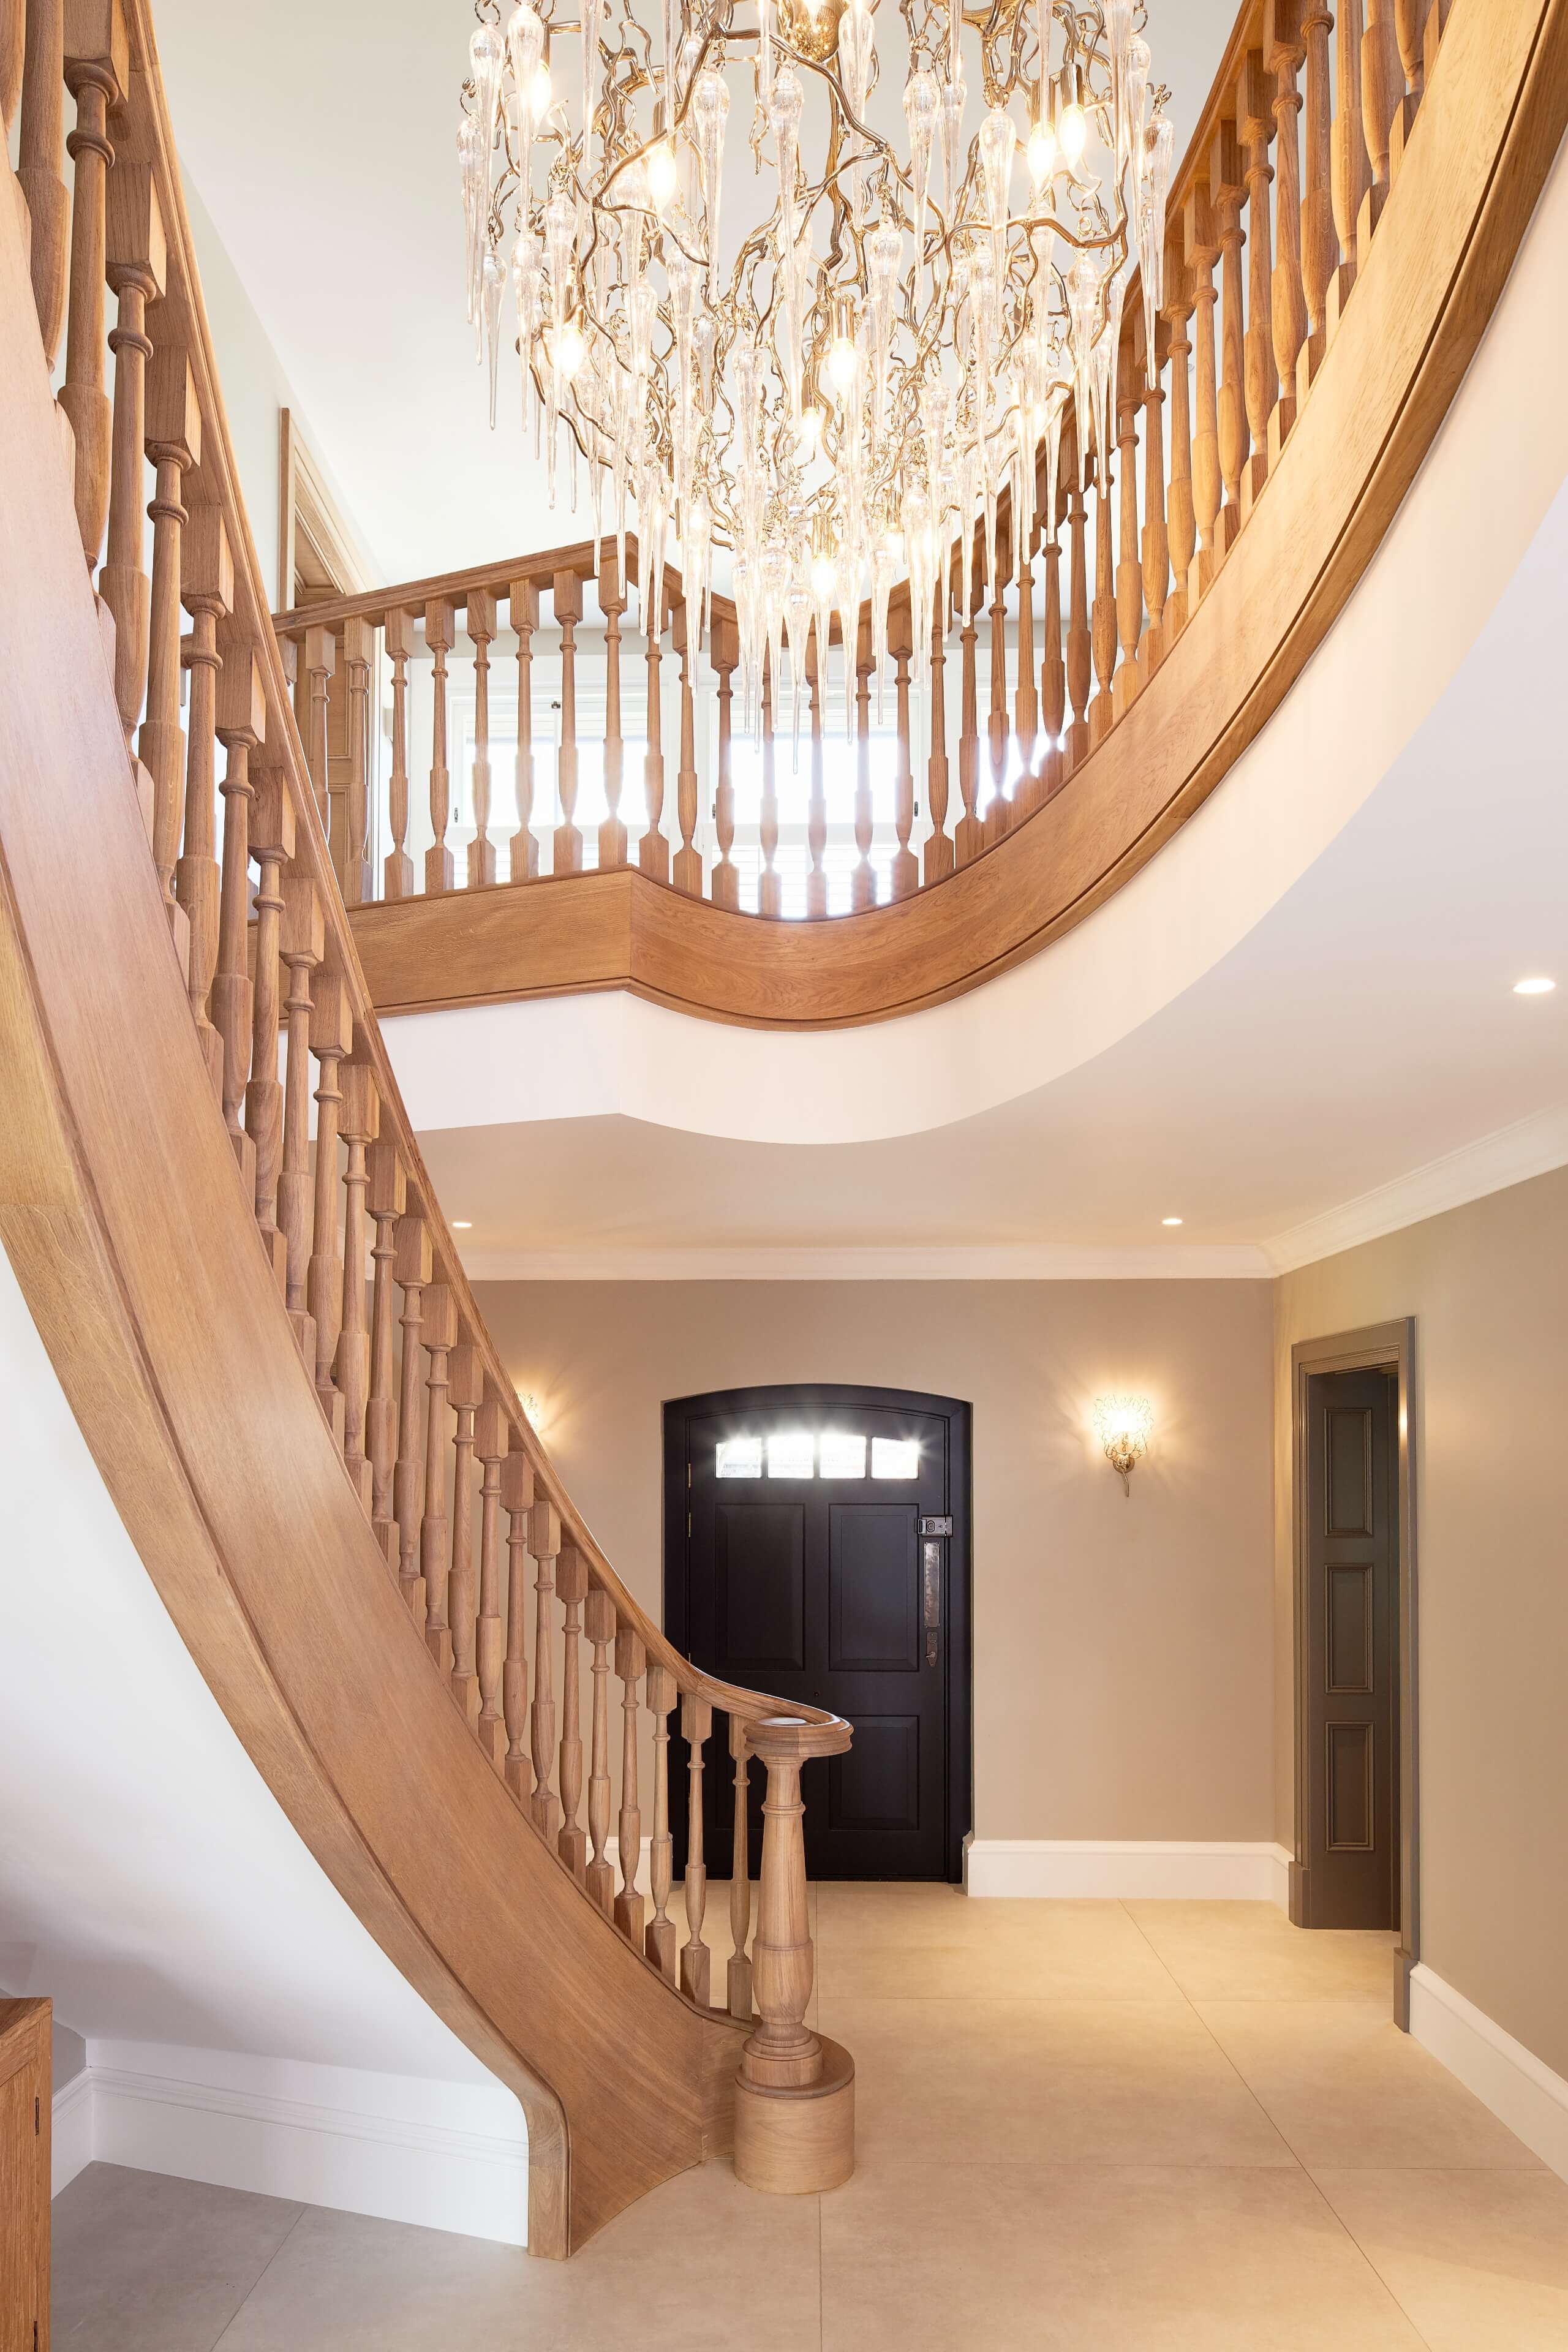 A bespoke solid oak elliptical staircase by Hetherington Newman